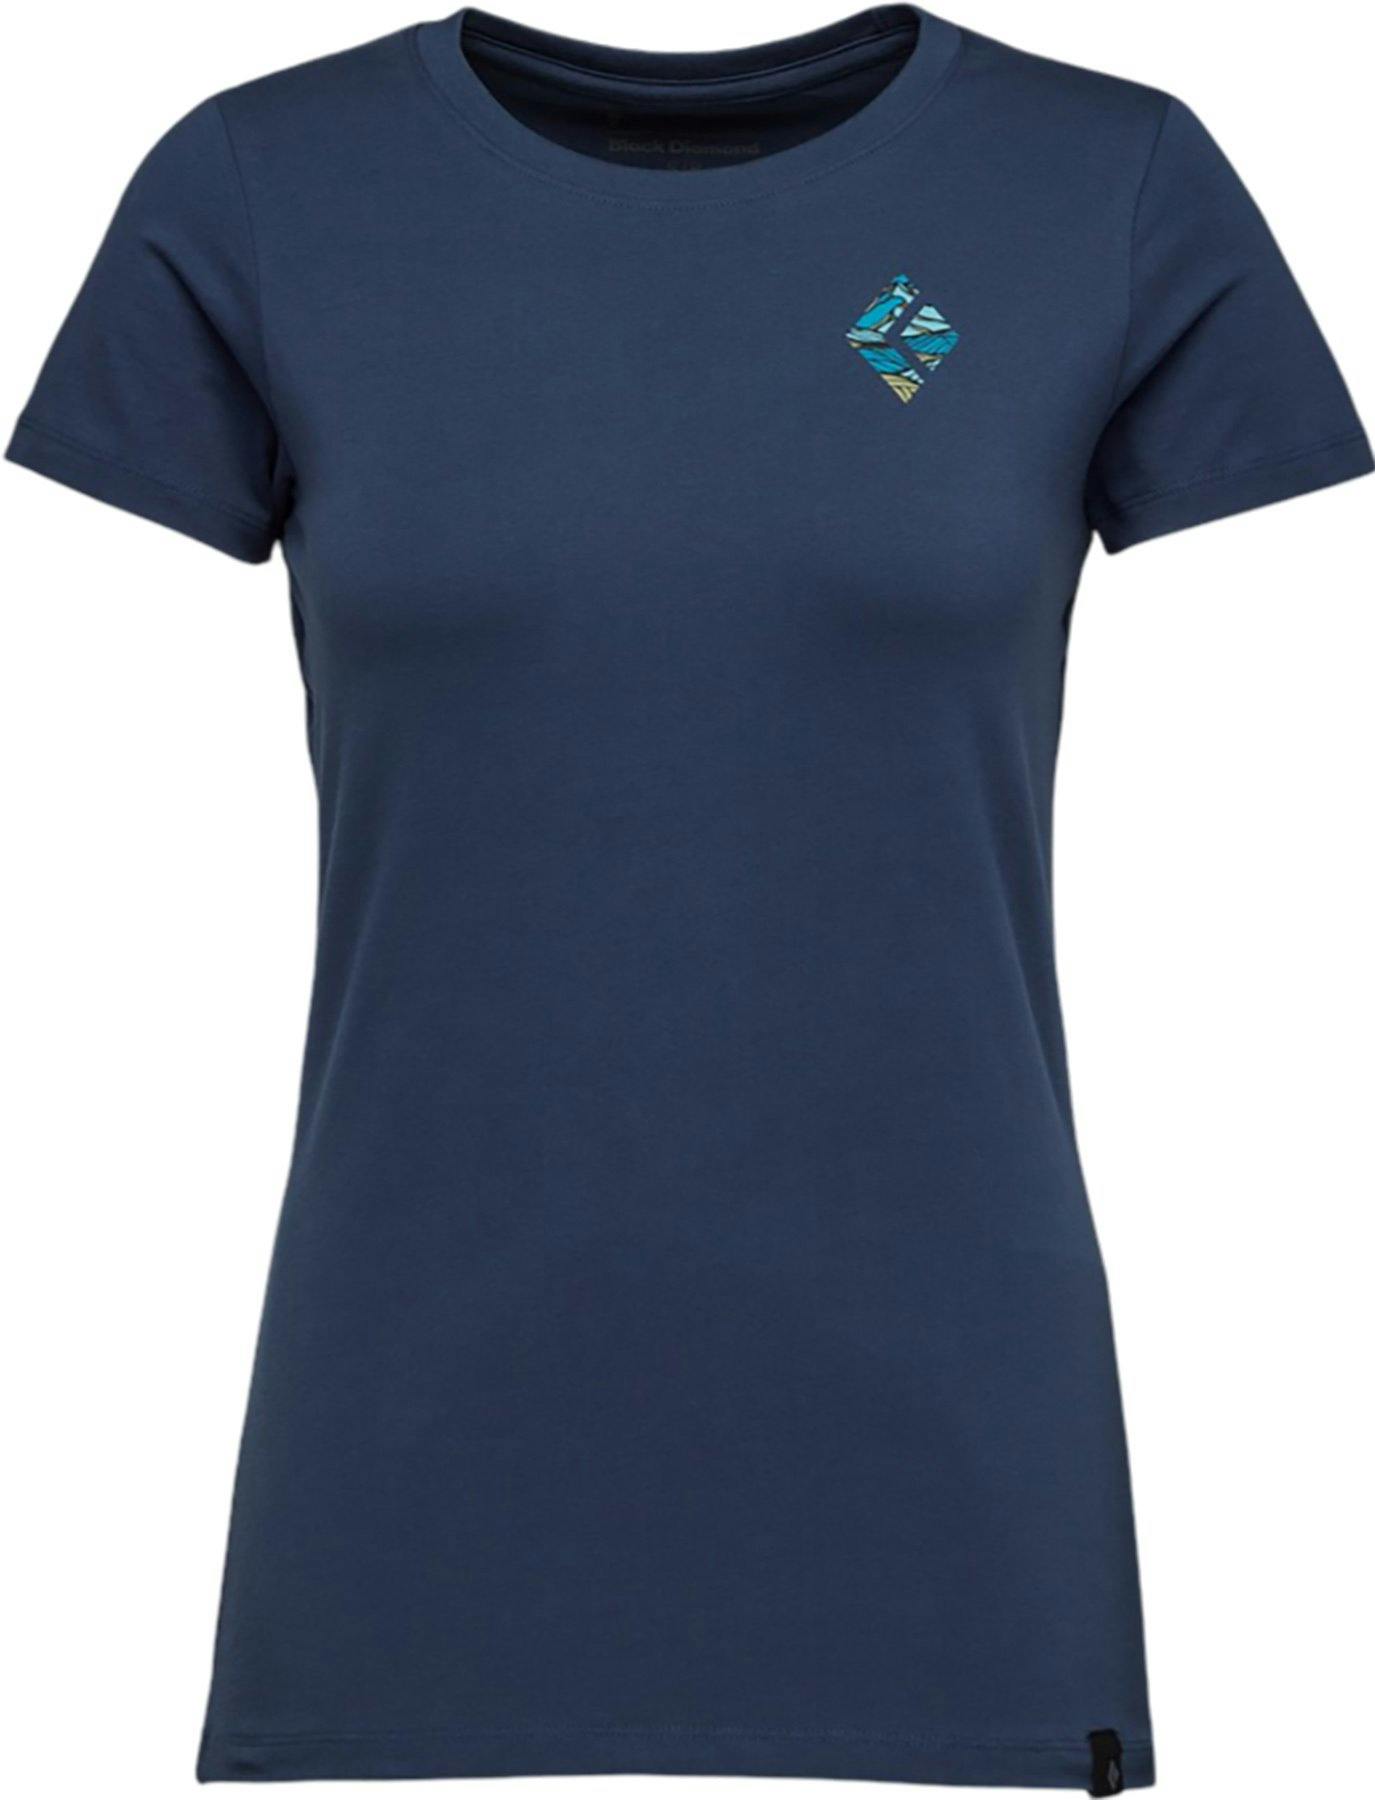 Product image for Mountain Diamond T-Shirt - Women's